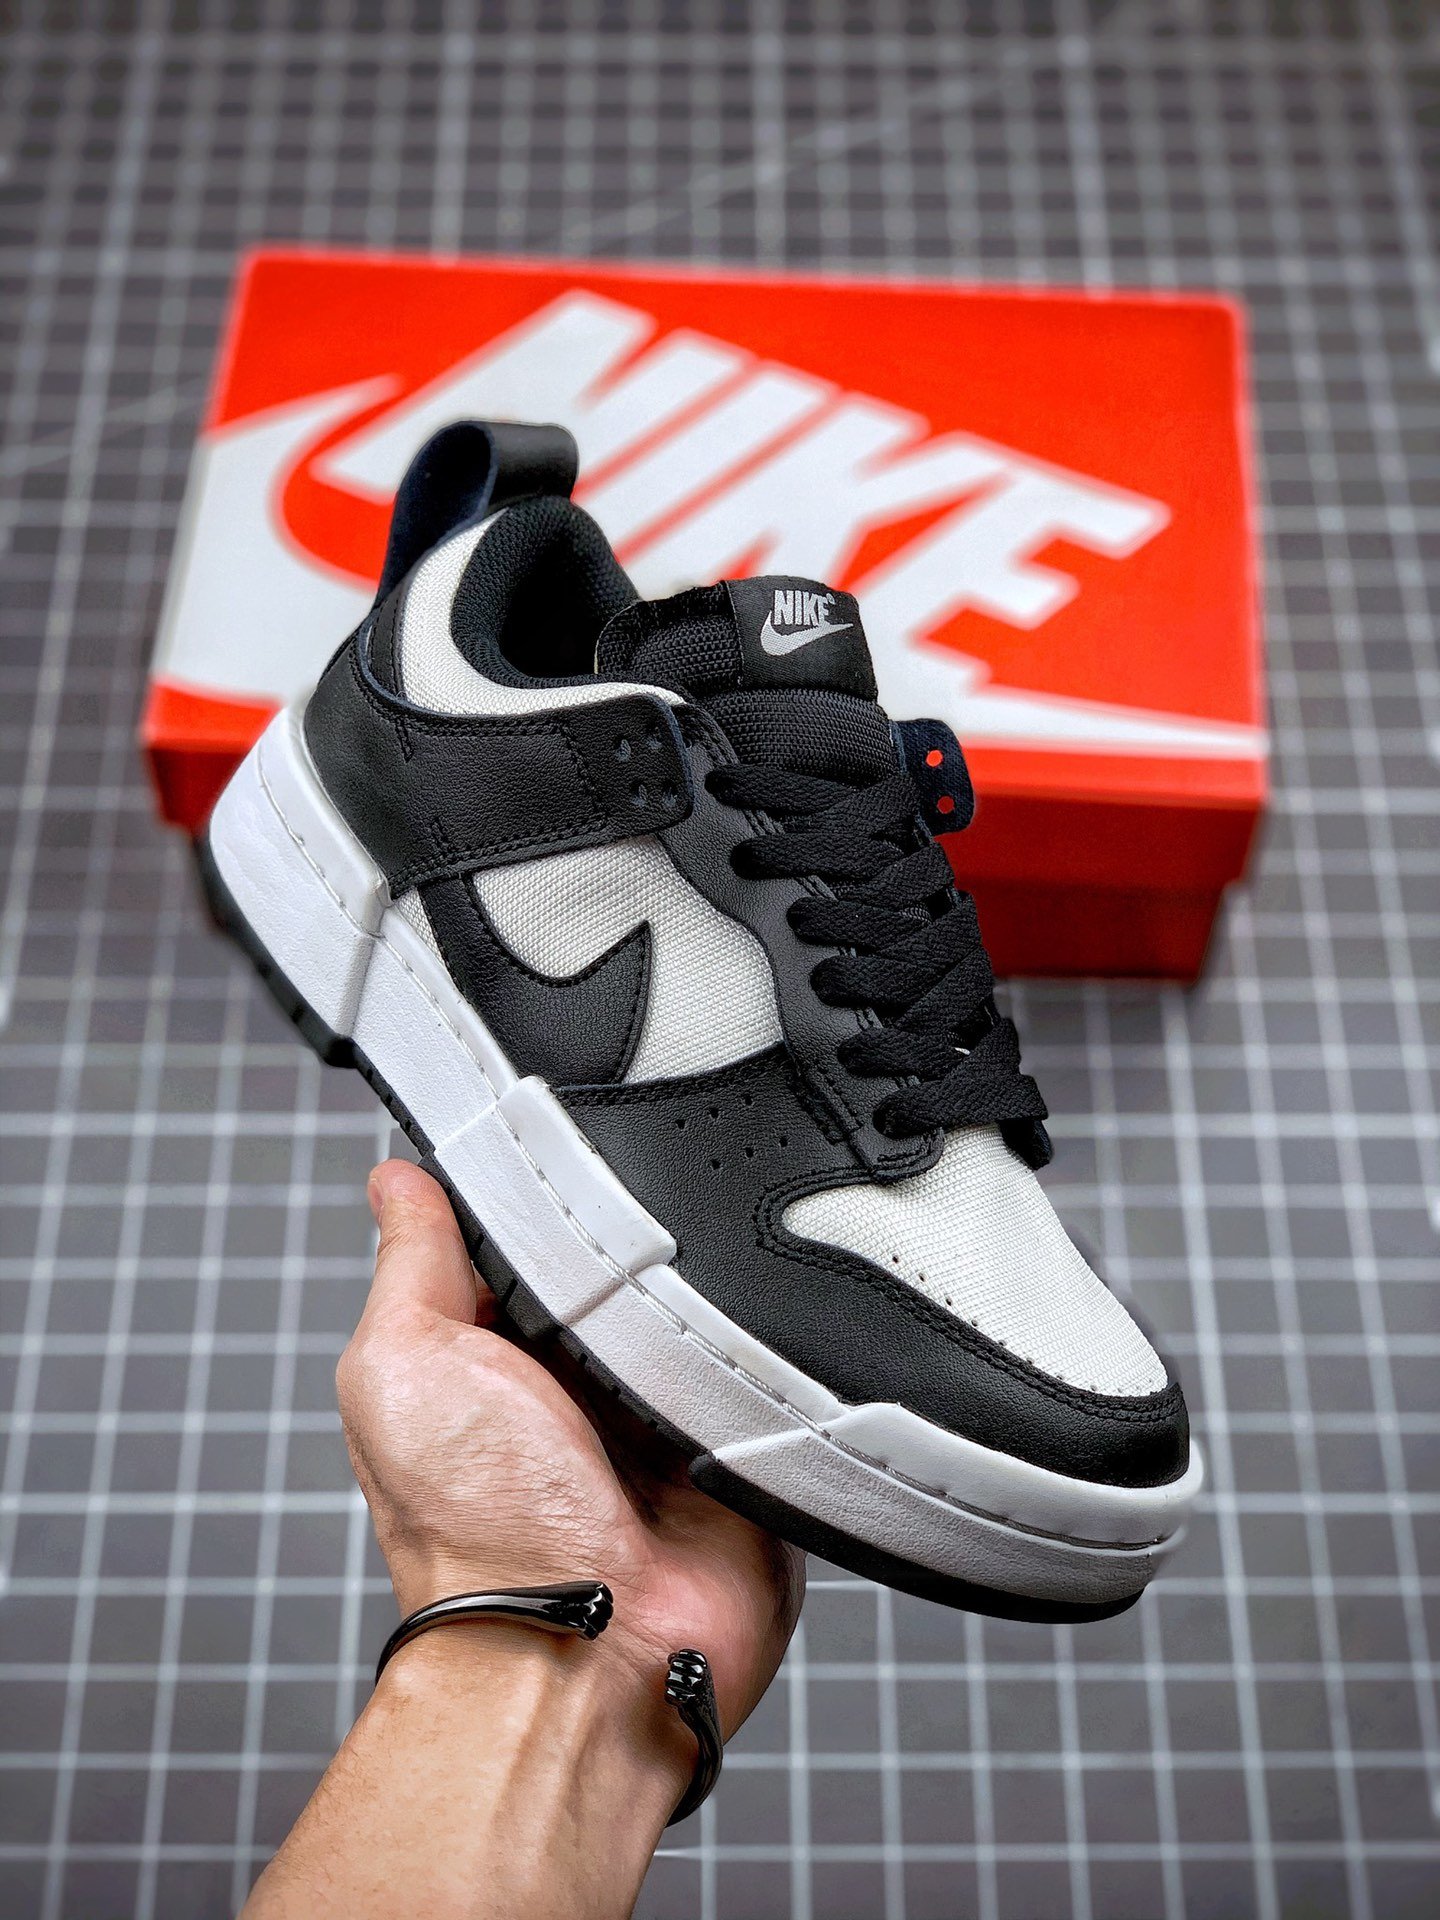 Nike Dunk Low Disrupt "Black/White" CK6654-102 Shoes